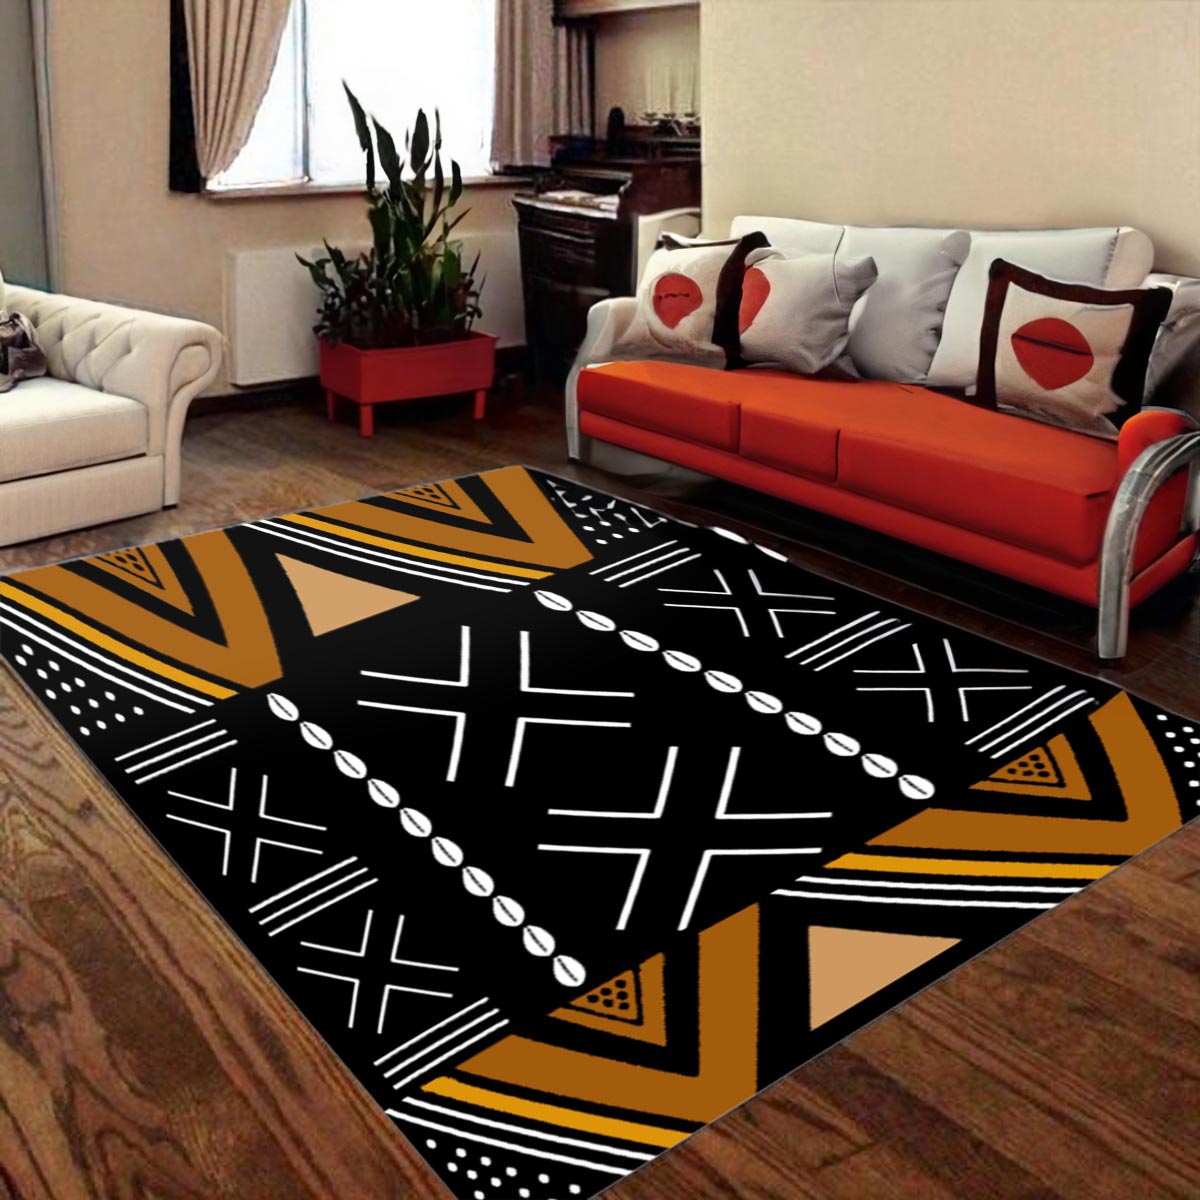 Afrocentric Rug - Vibrant Tribal Print Carpet Design